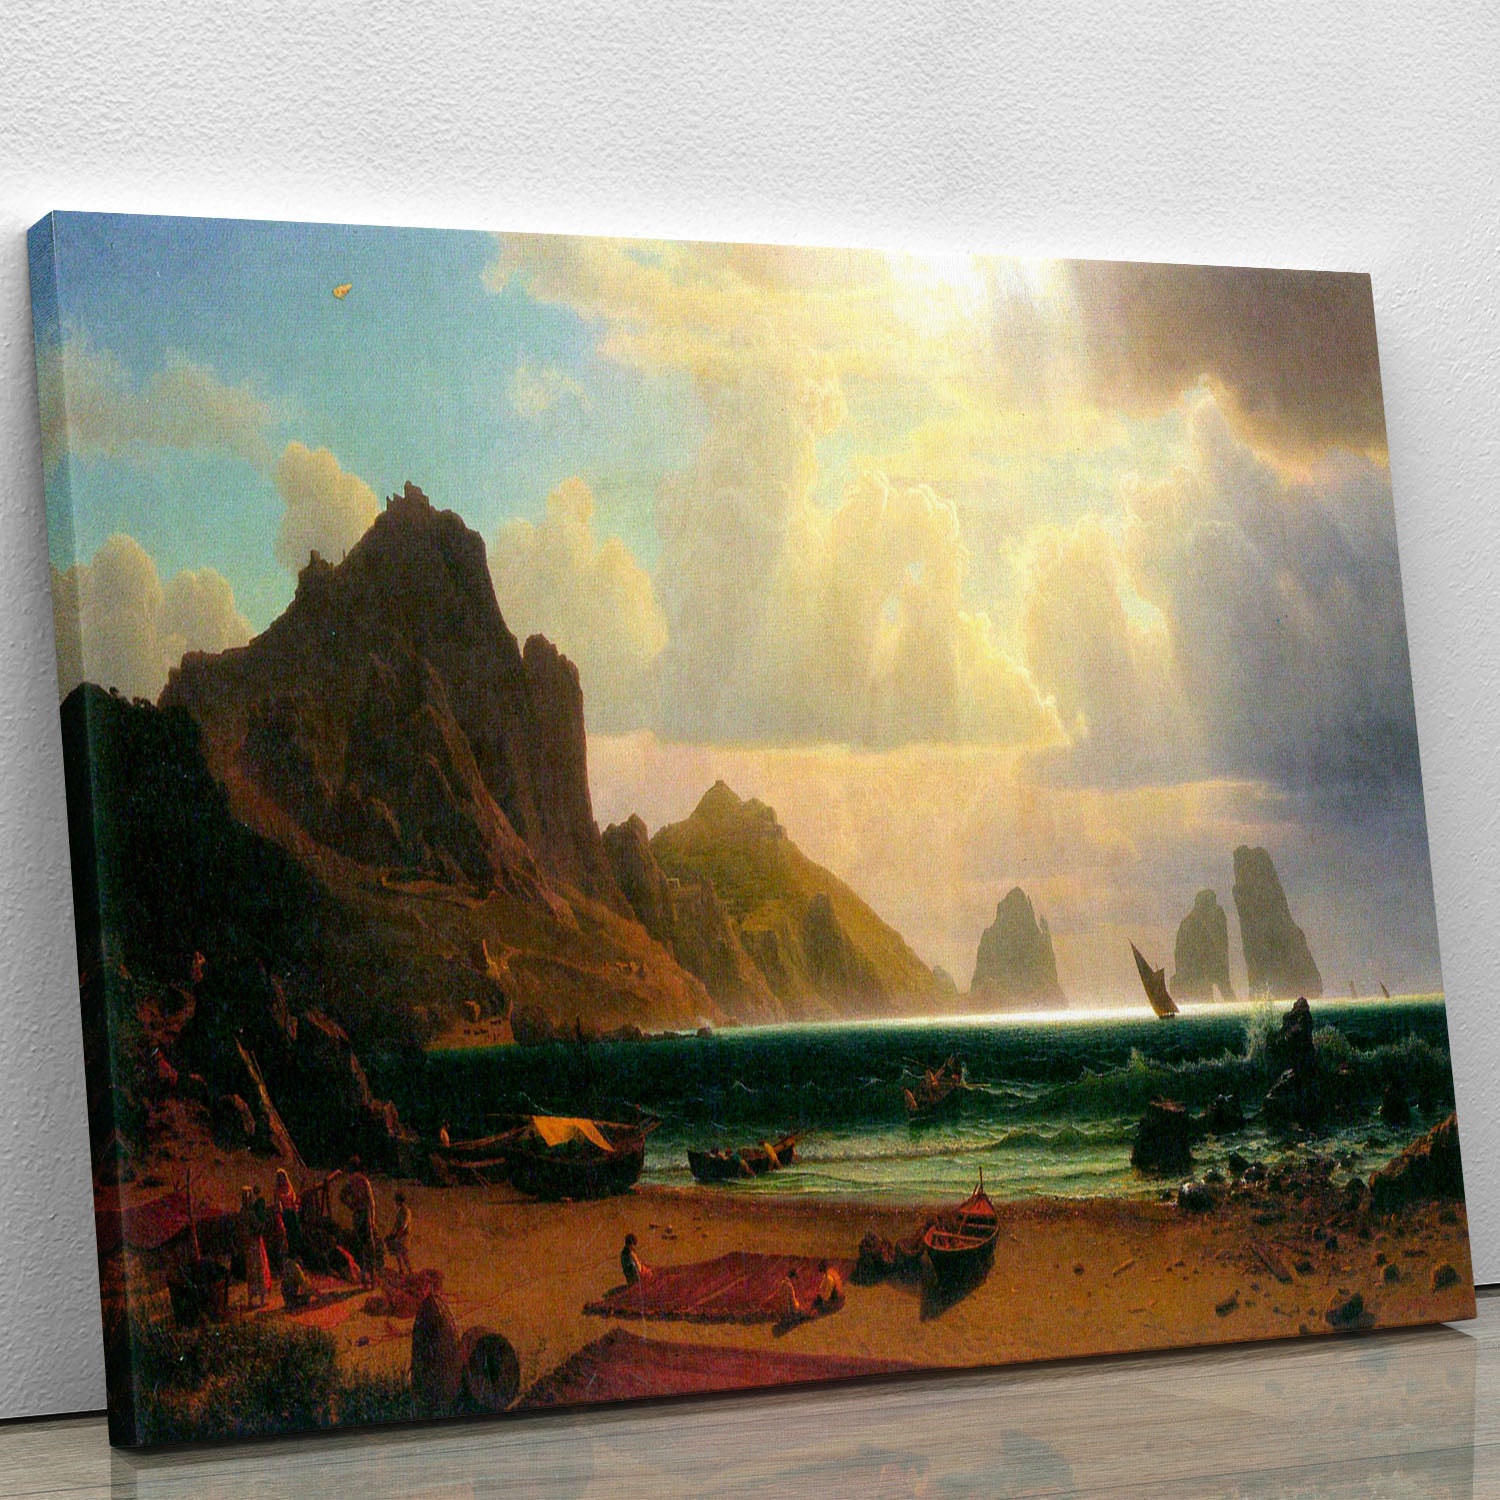 Marina Piccola Capri by Bierstadt Canvas Print or Poster - Canvas Art Rocks - 1